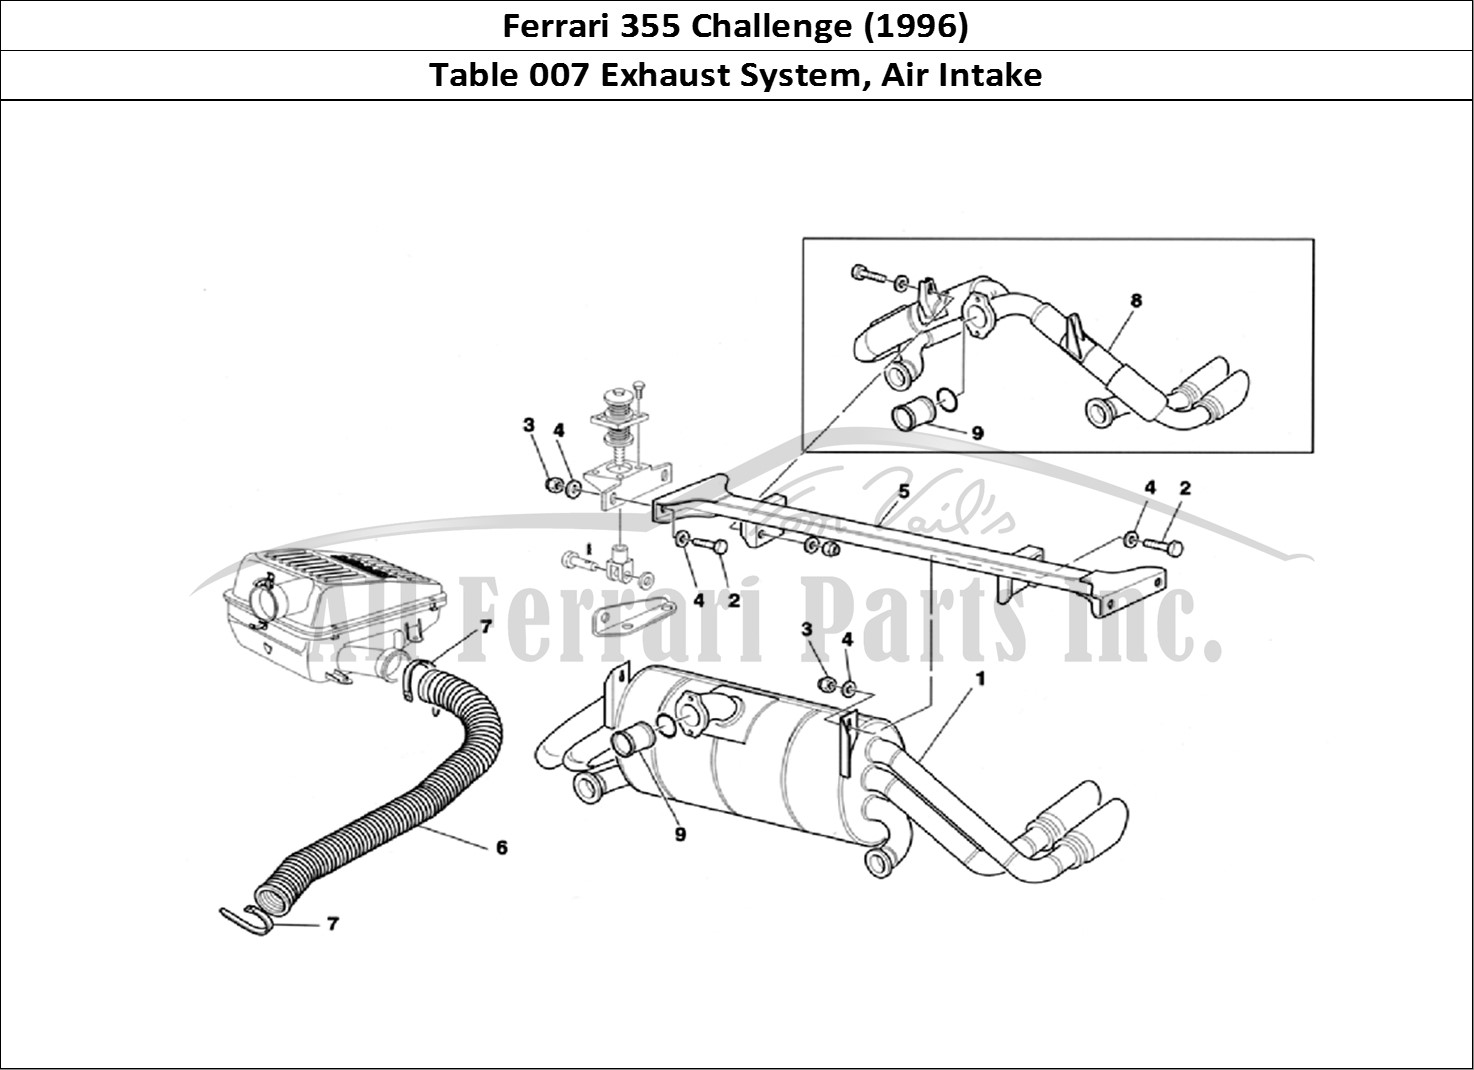 Ferrari Parts Ferrari 355 Challenge (1996) Page 007 Exhaust System - Air Inta